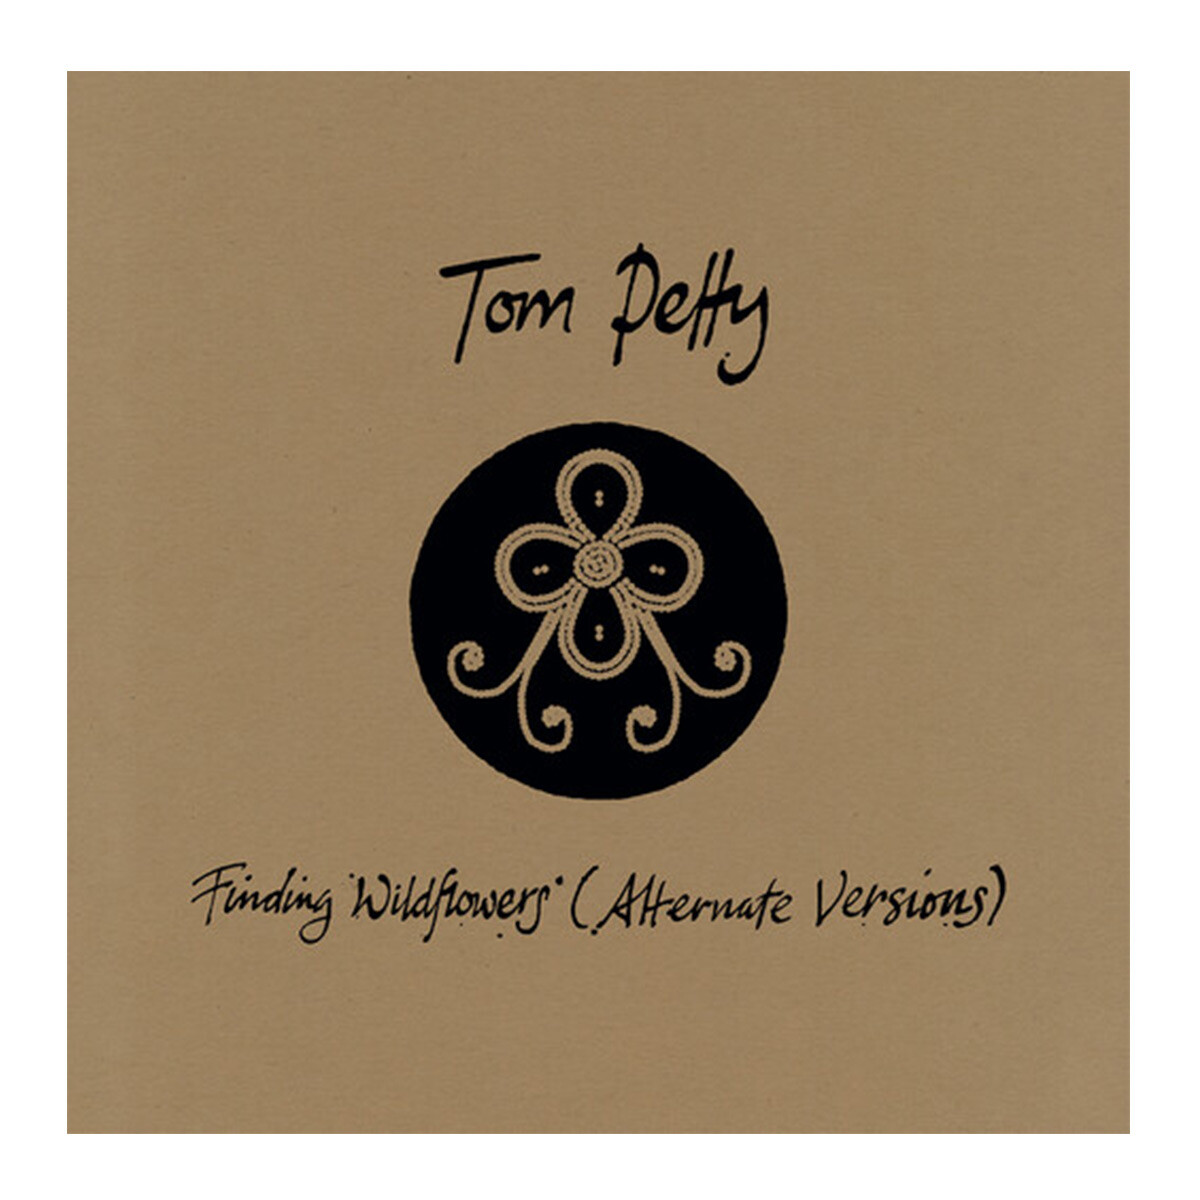 Petty, Tom - Finding Wildflowers Vinilo 